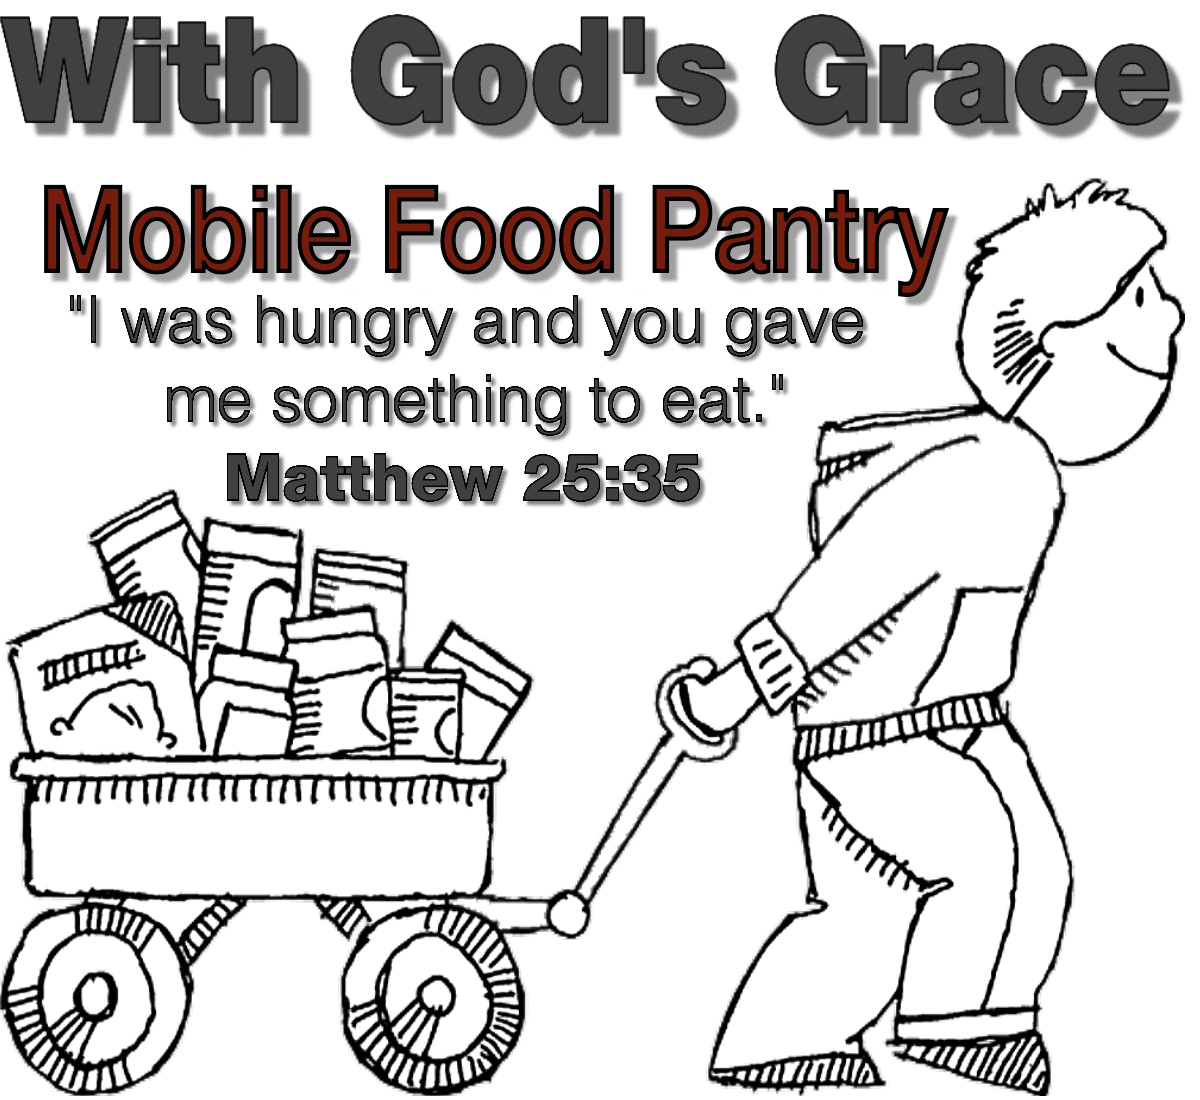 Wtih Gods Grace Mobile Food Pantry